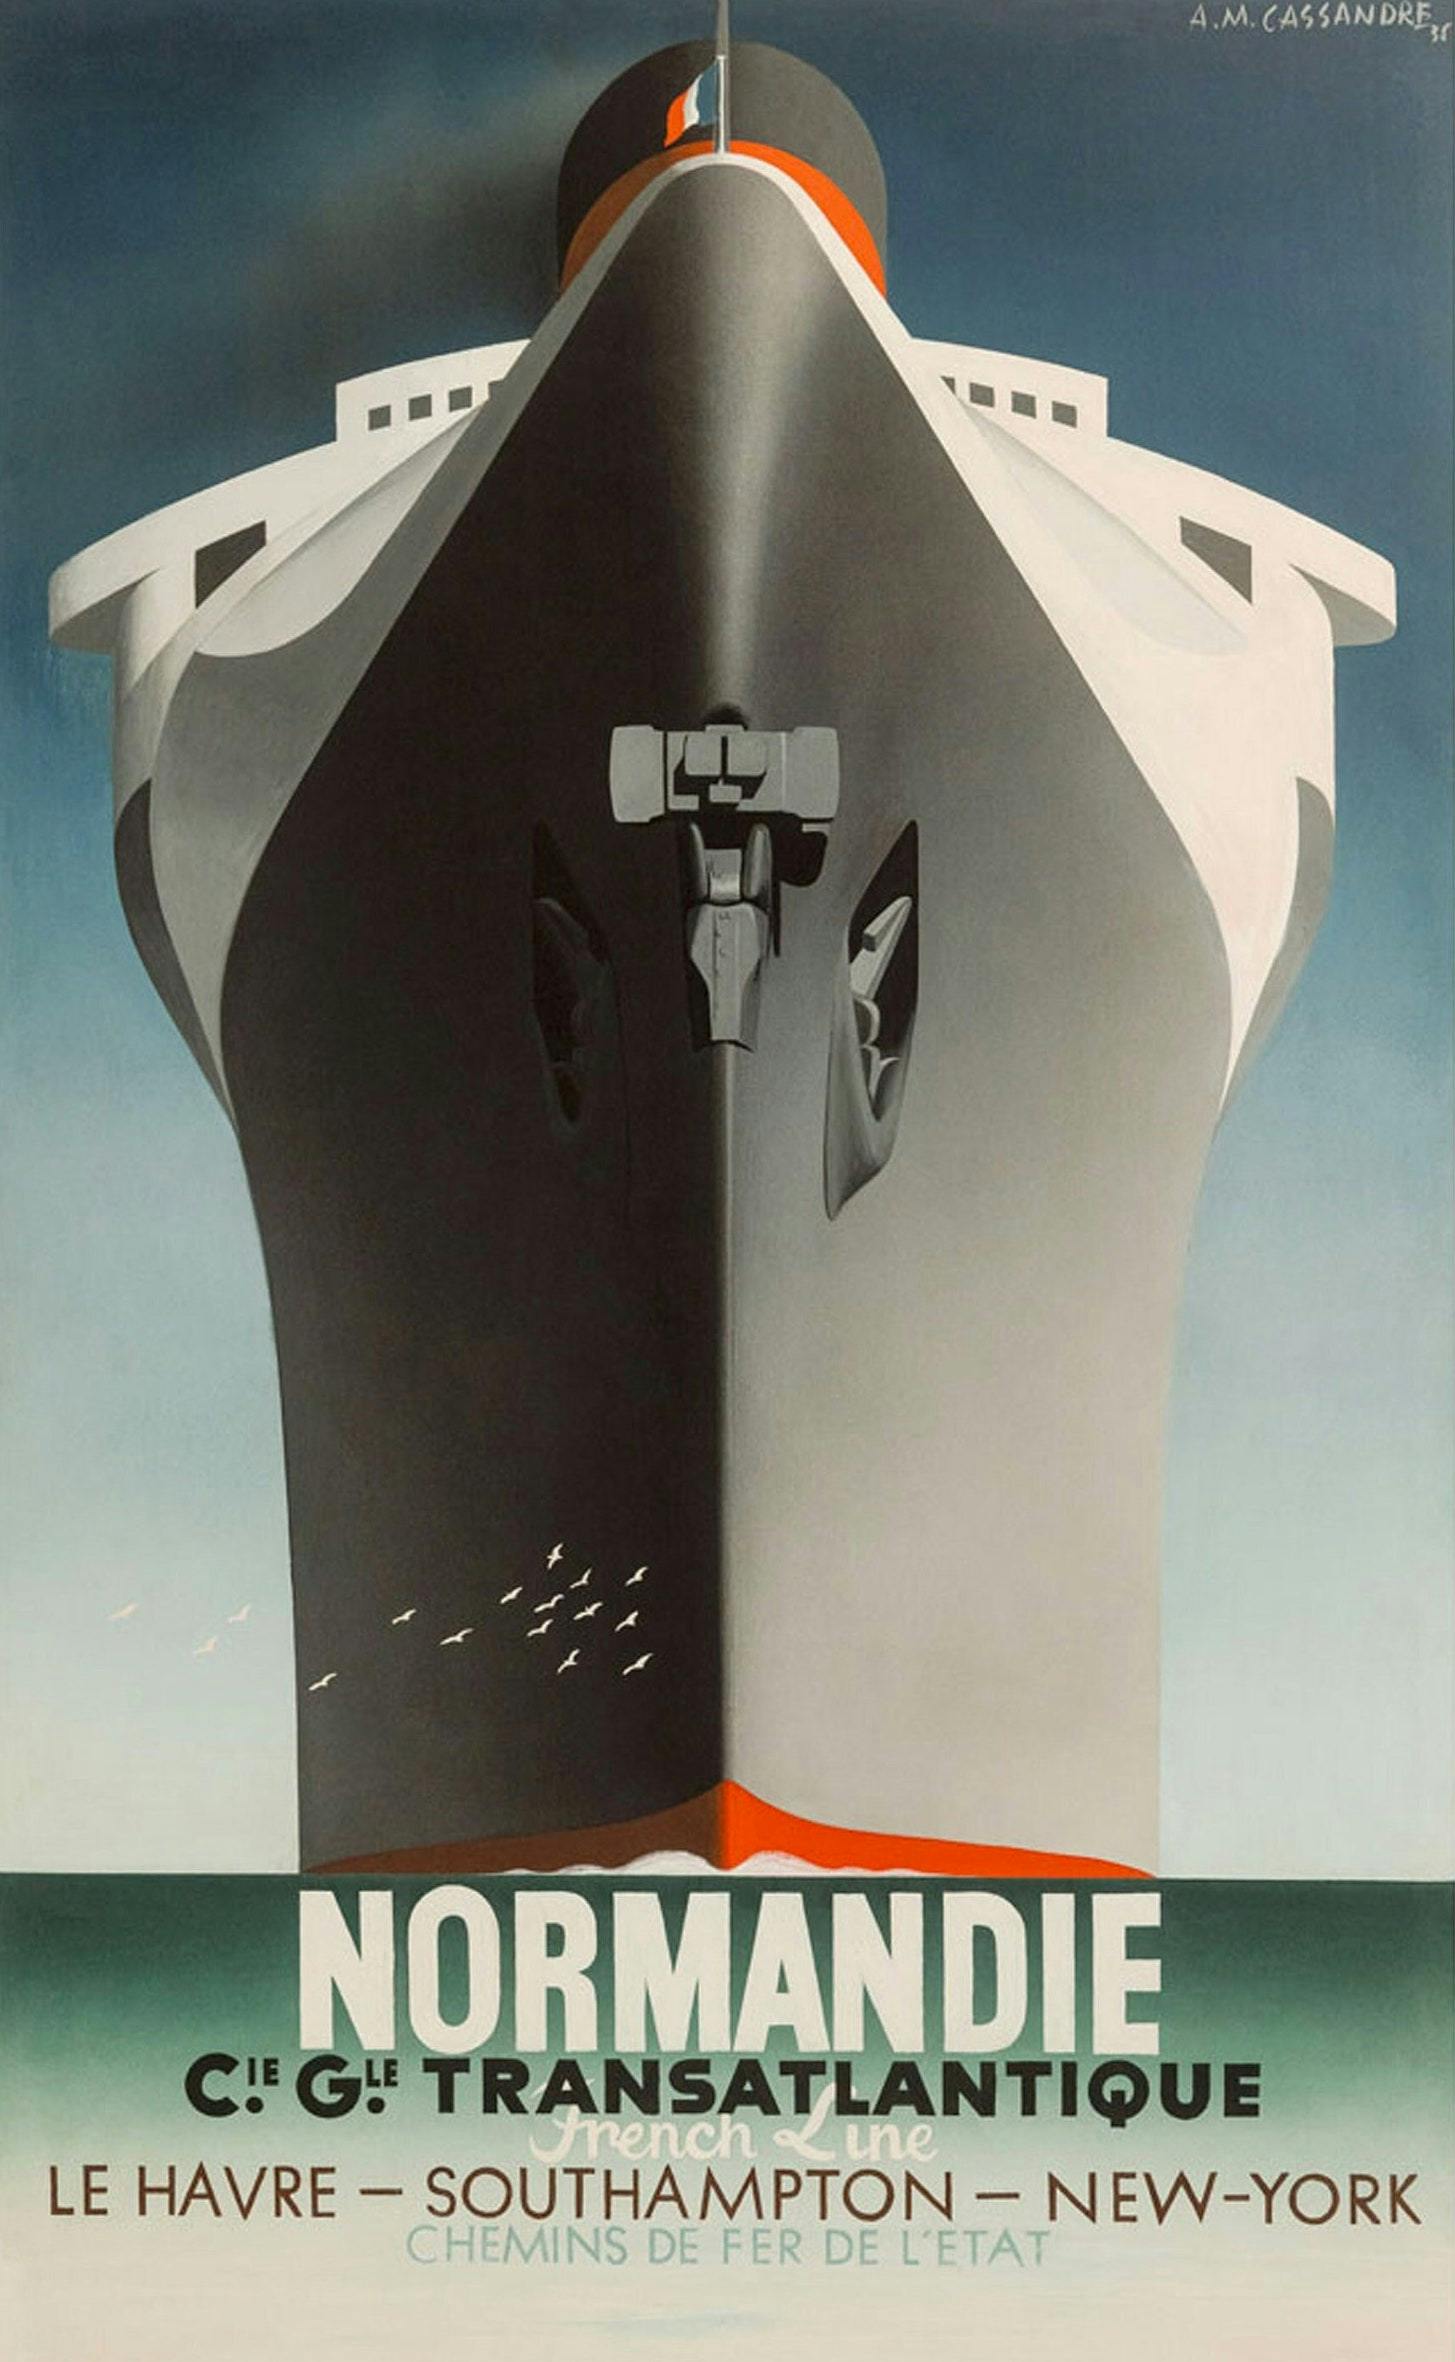 Normandie, 1935, by A.M. Cassandre